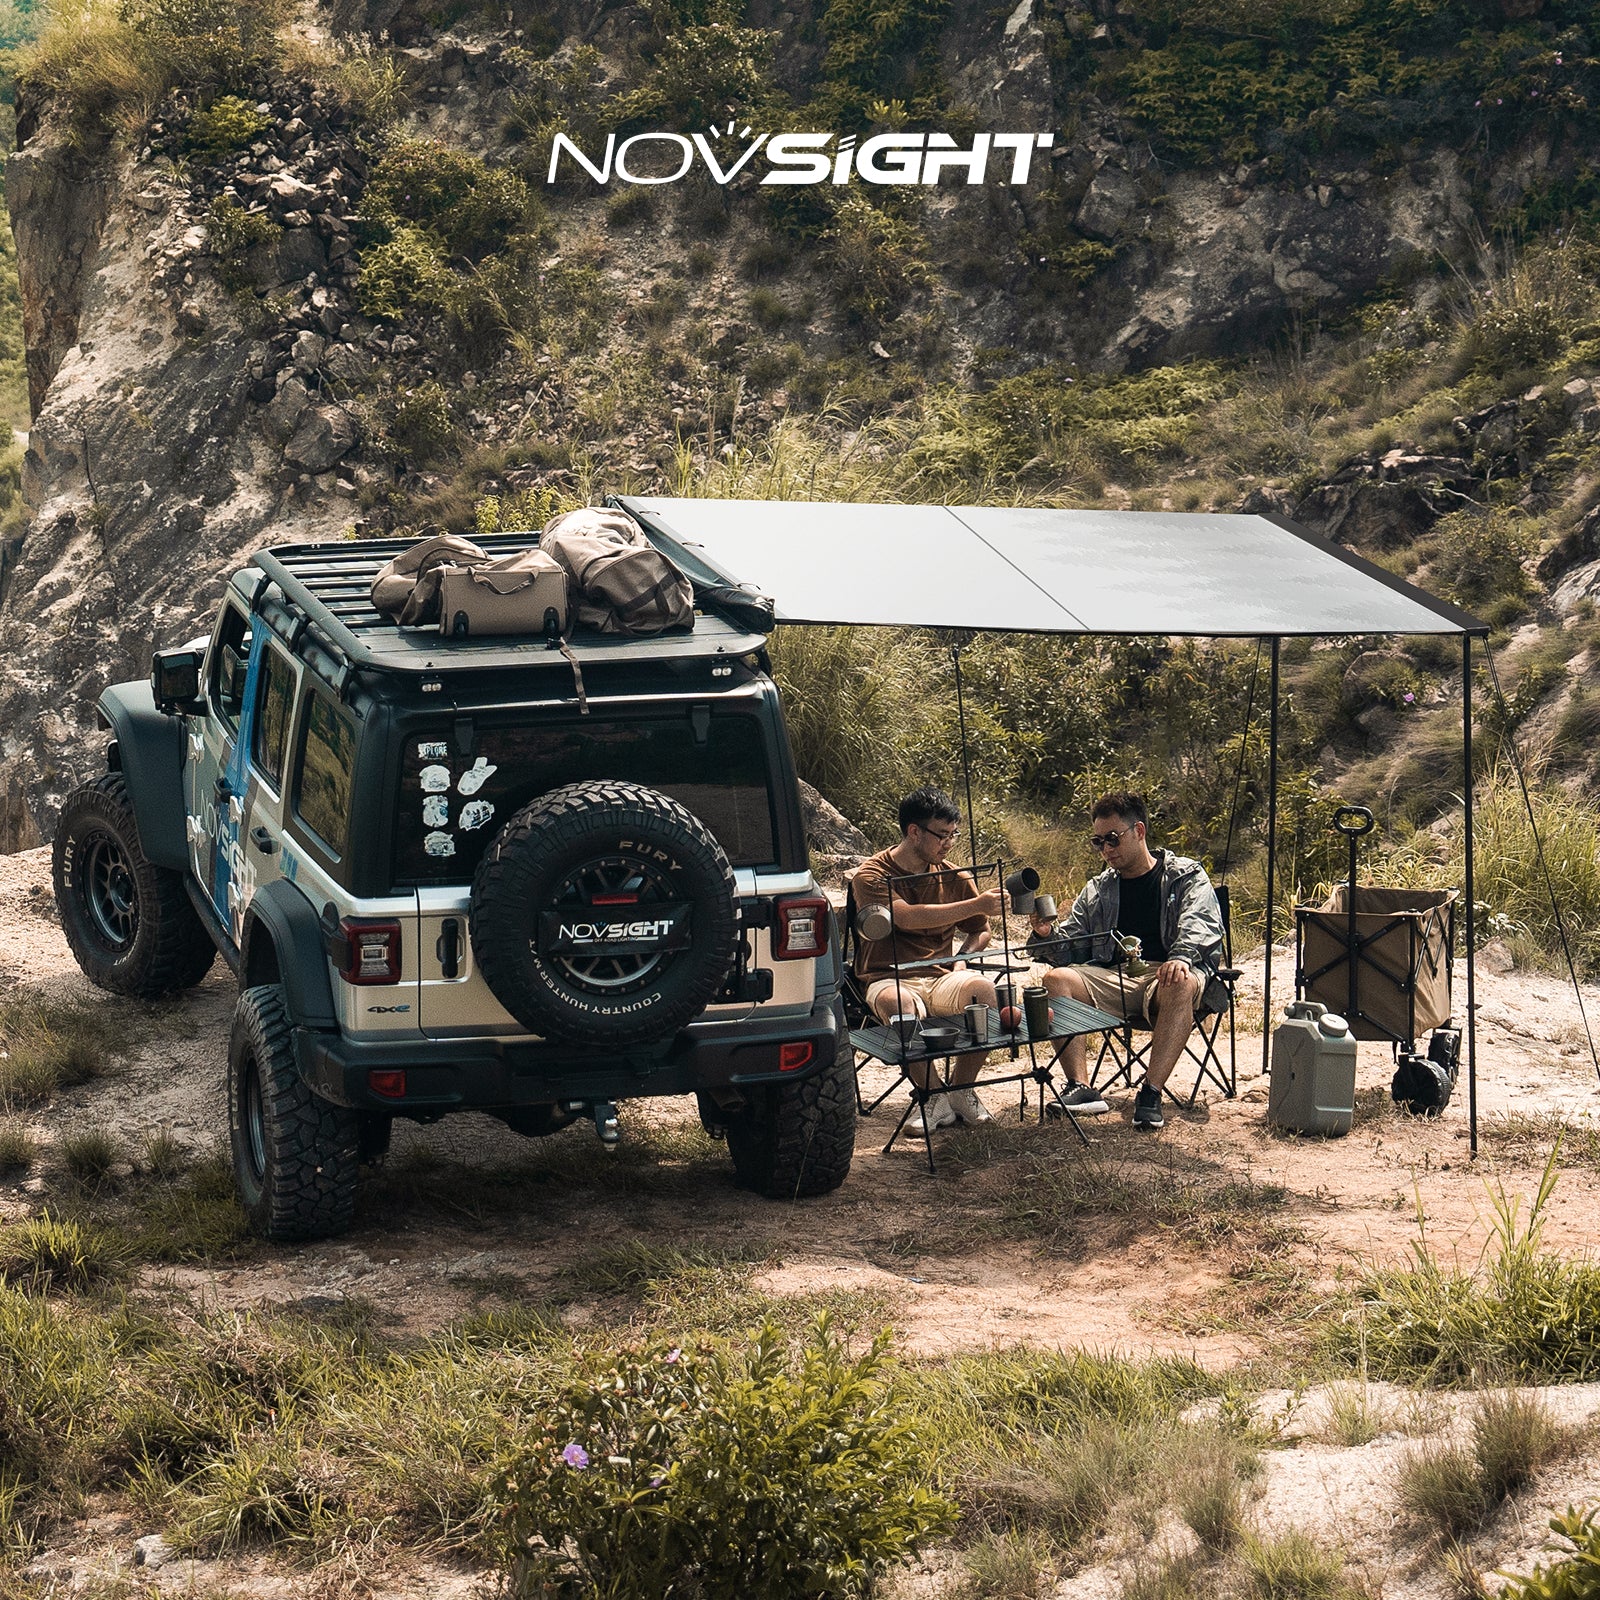 Novsight Car Side Awning Tent Anti UV for Outdoor Camping Overland Shelter for JEEP SUV Van Camper Trailer - NOVSIGHT